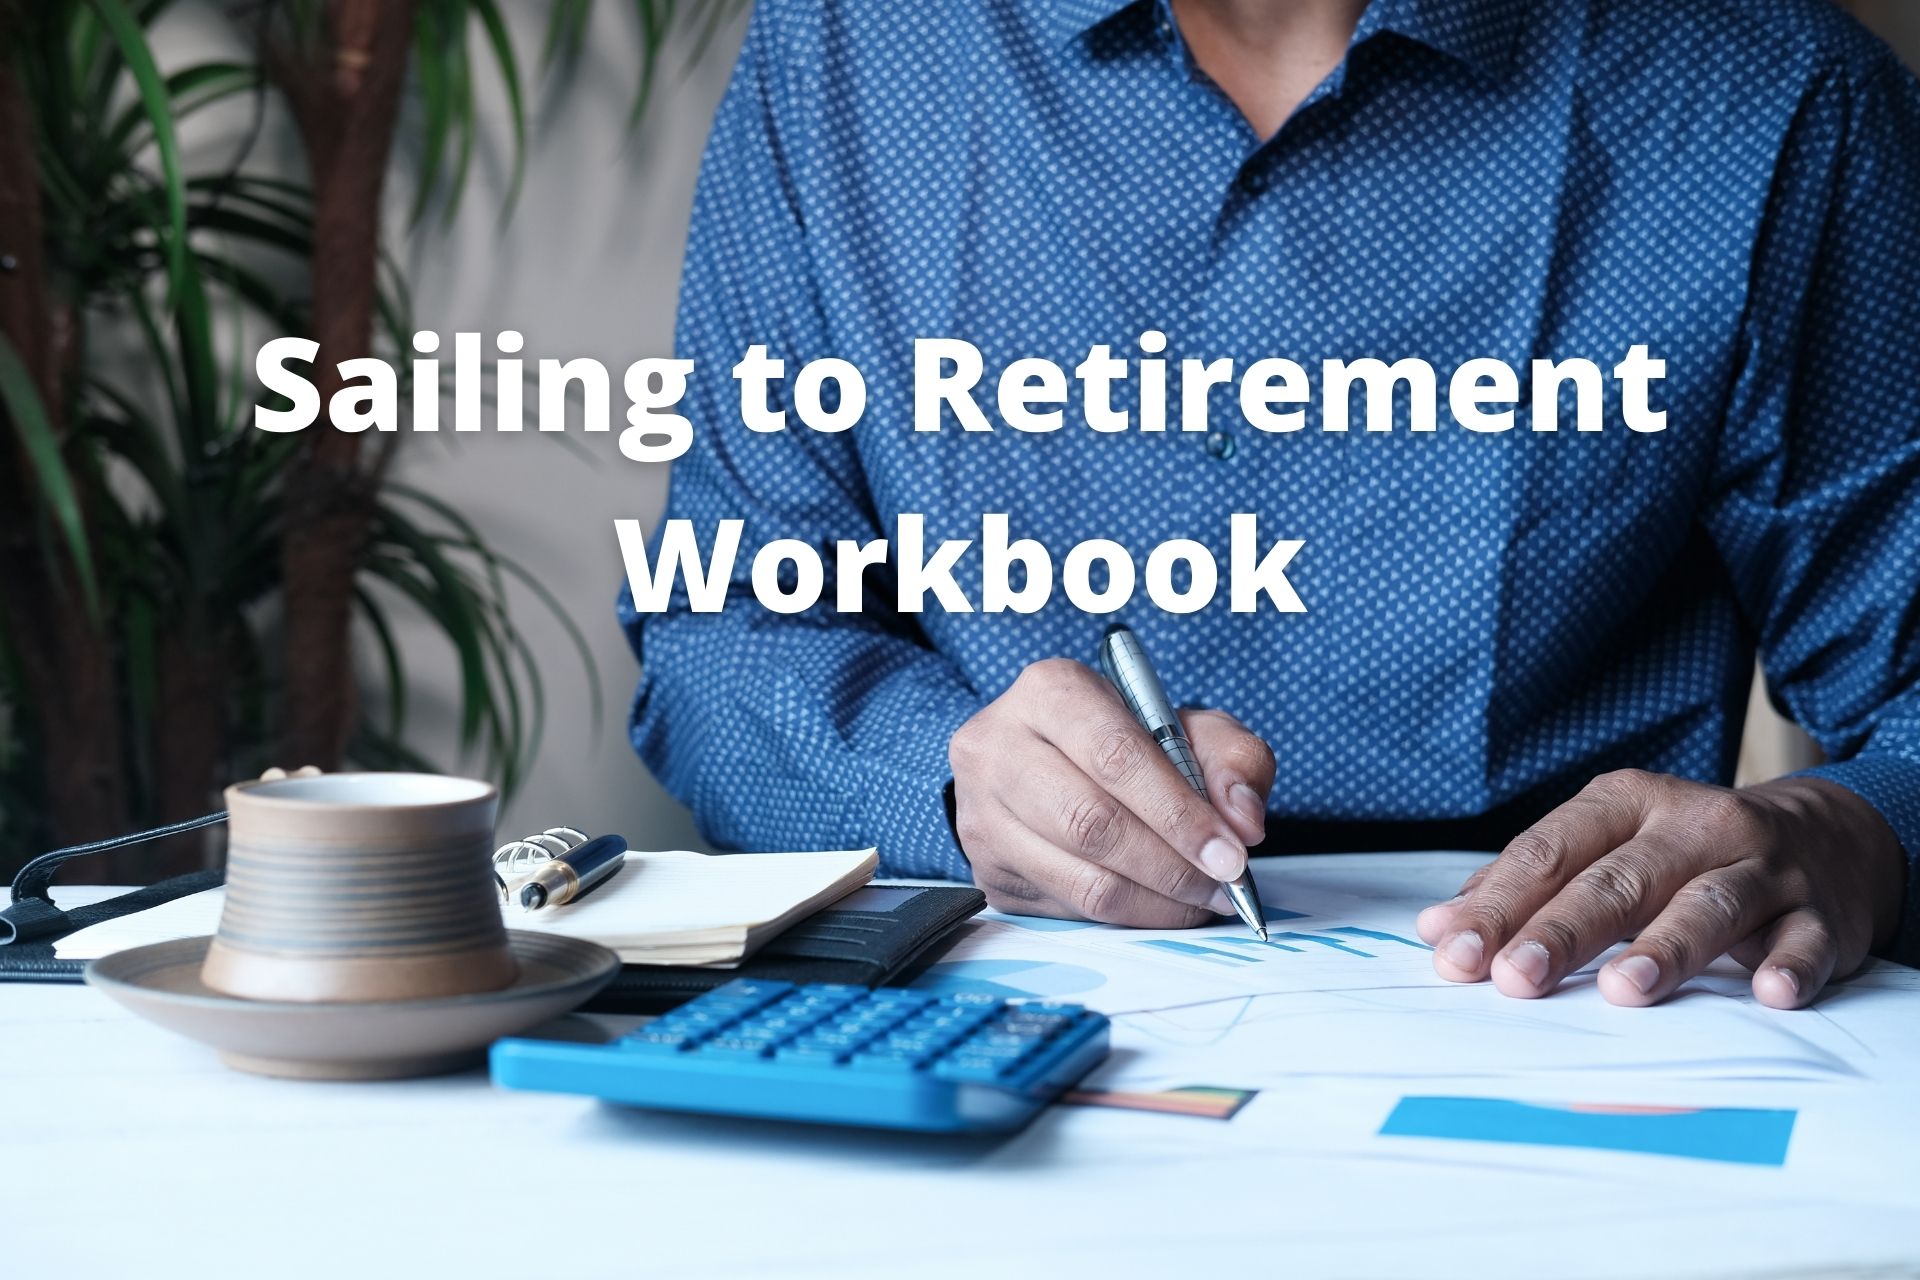 Sailing to Retirement Workbook